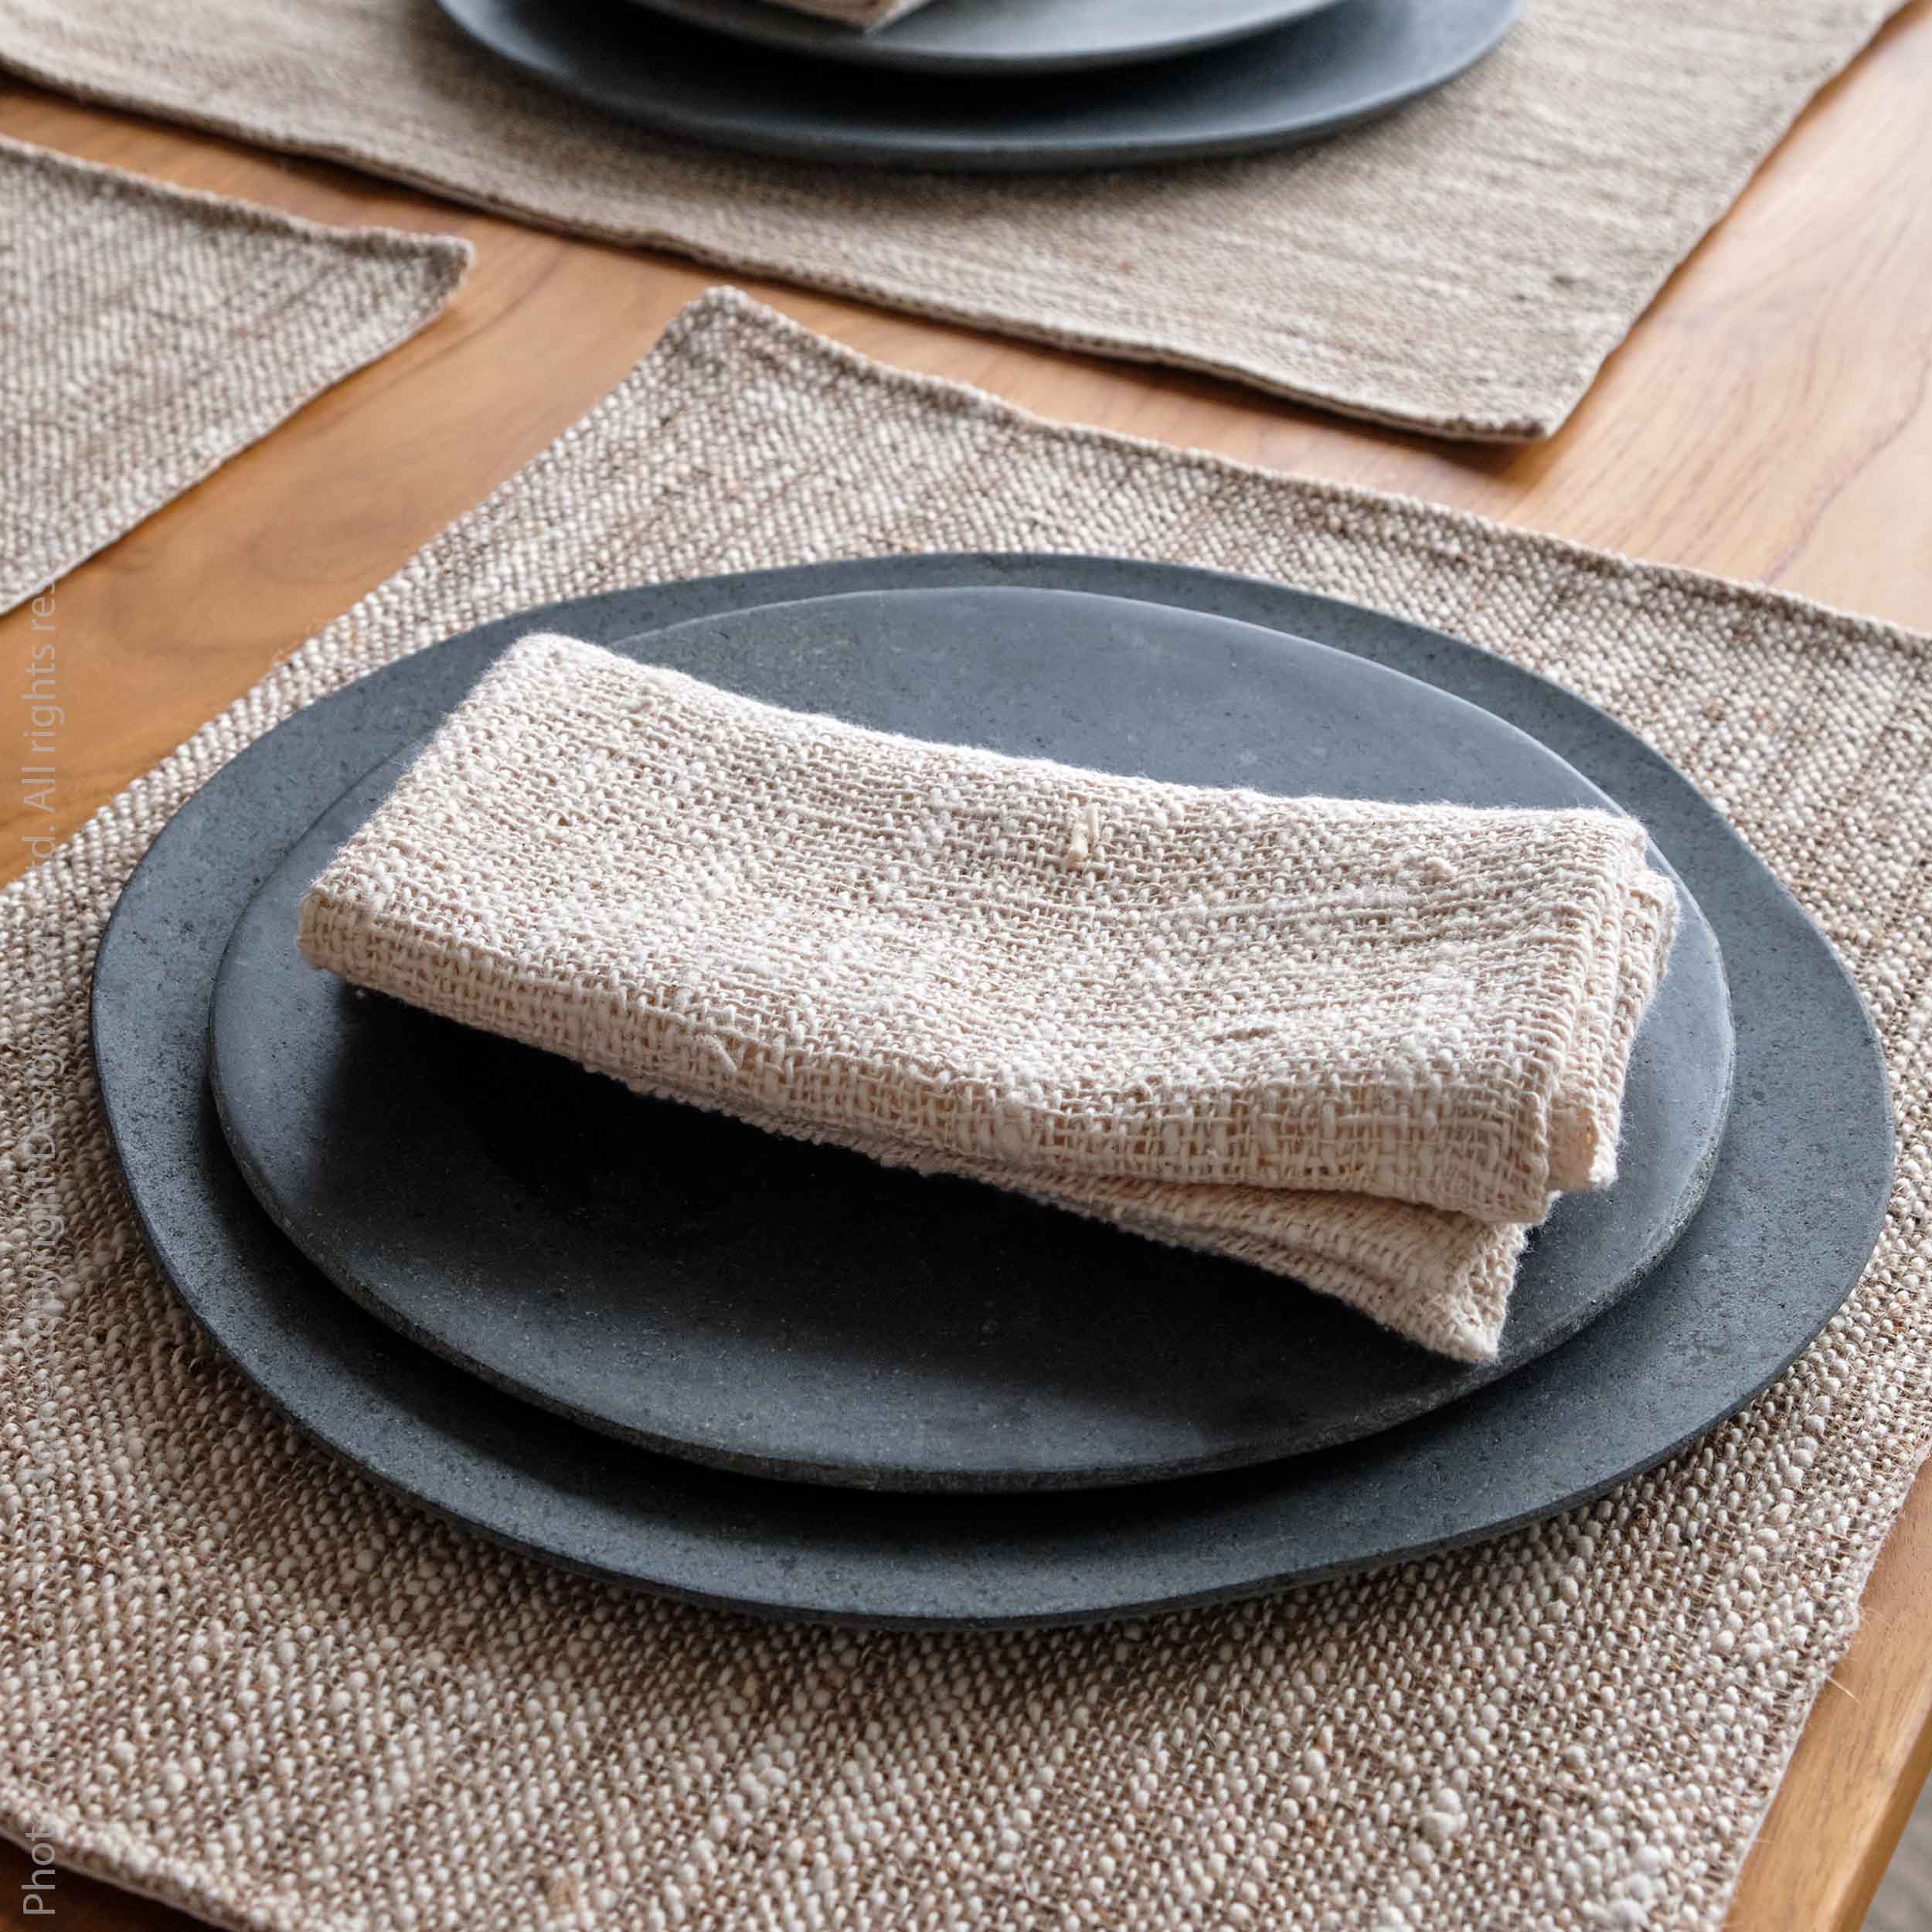 Dinner napkins set of 4 8 12 in sand color made of natural linen